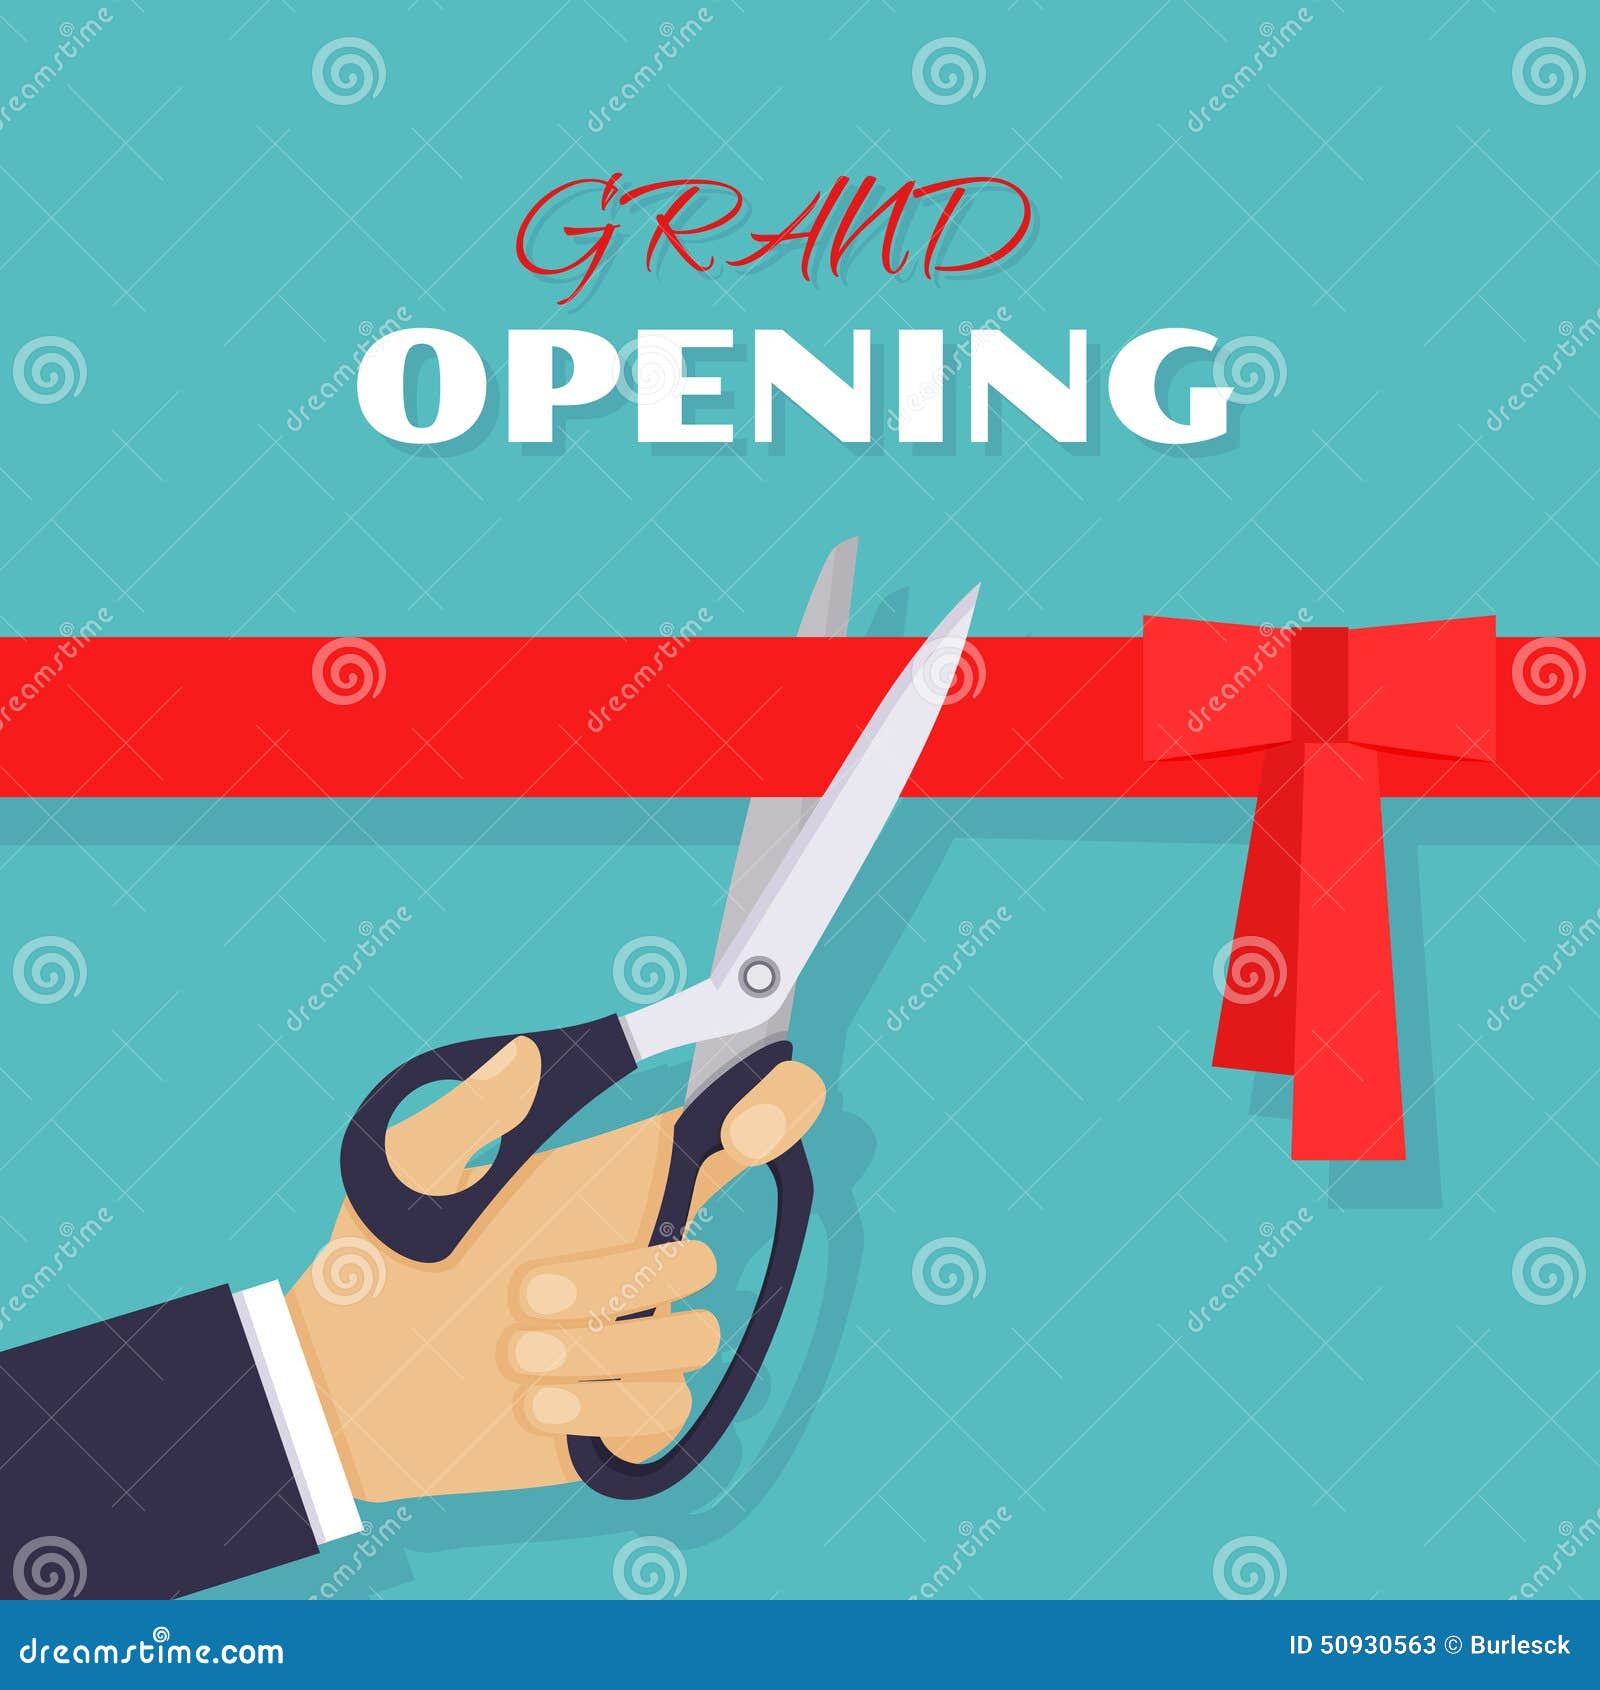 grand opening. scissors cut red ribbon